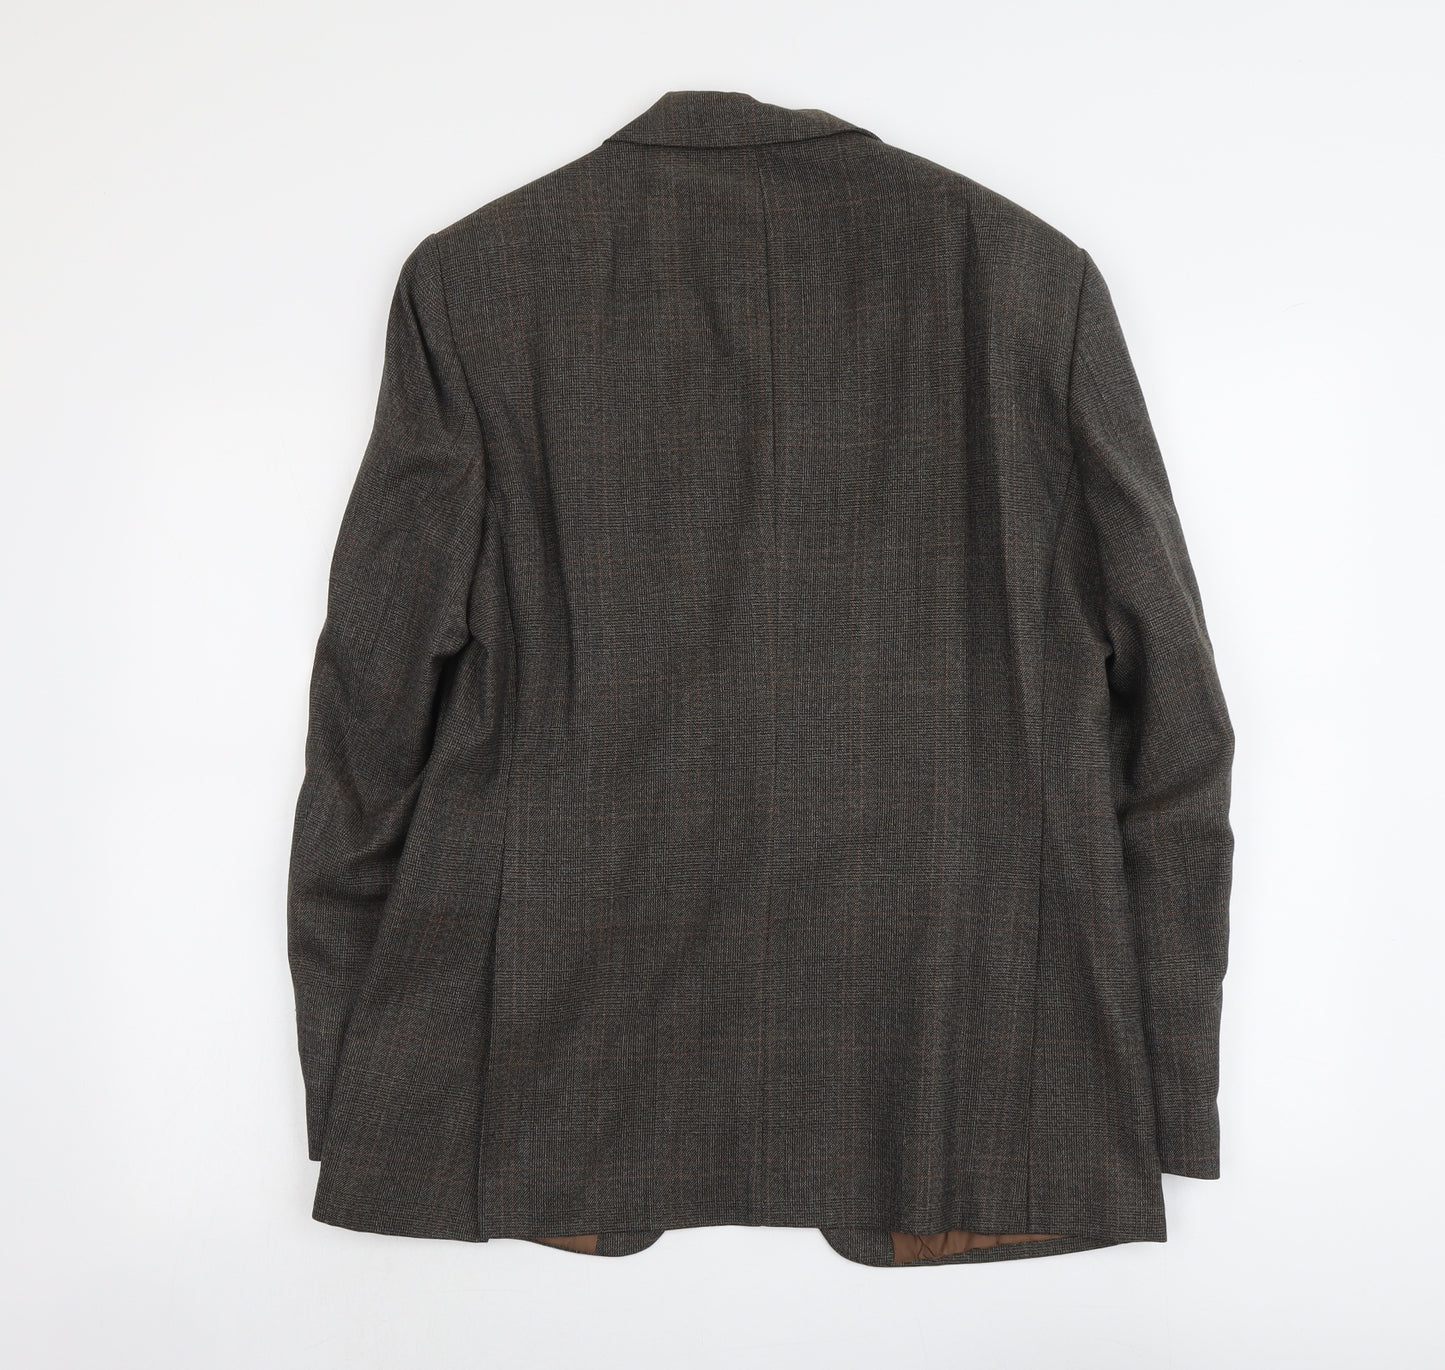 Hardy Amies Mens Grey Geometric Wool Jacket Suit Jacket Size M Regular